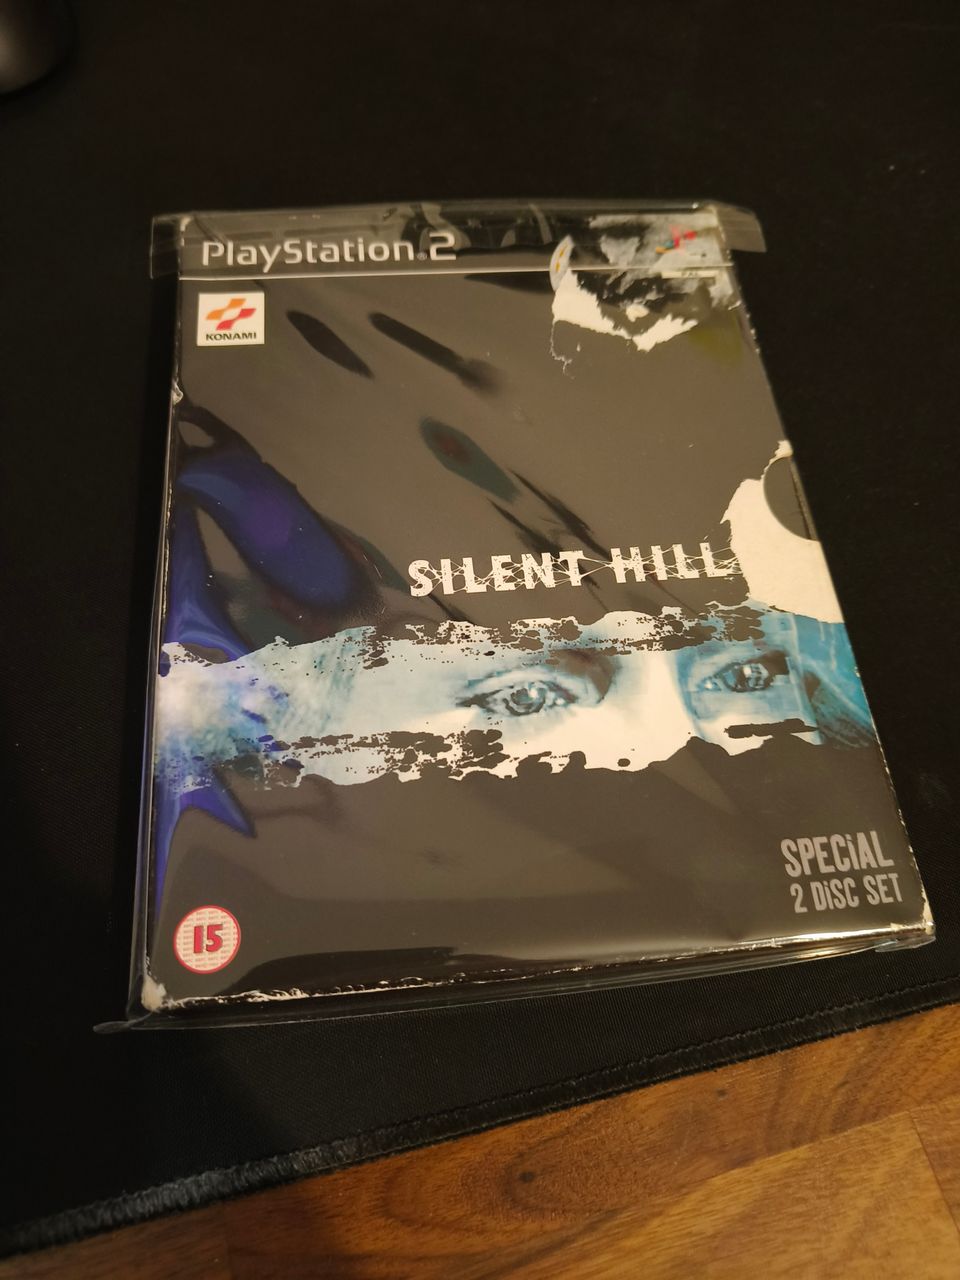 Silent Hill 2 Special 2 disk set